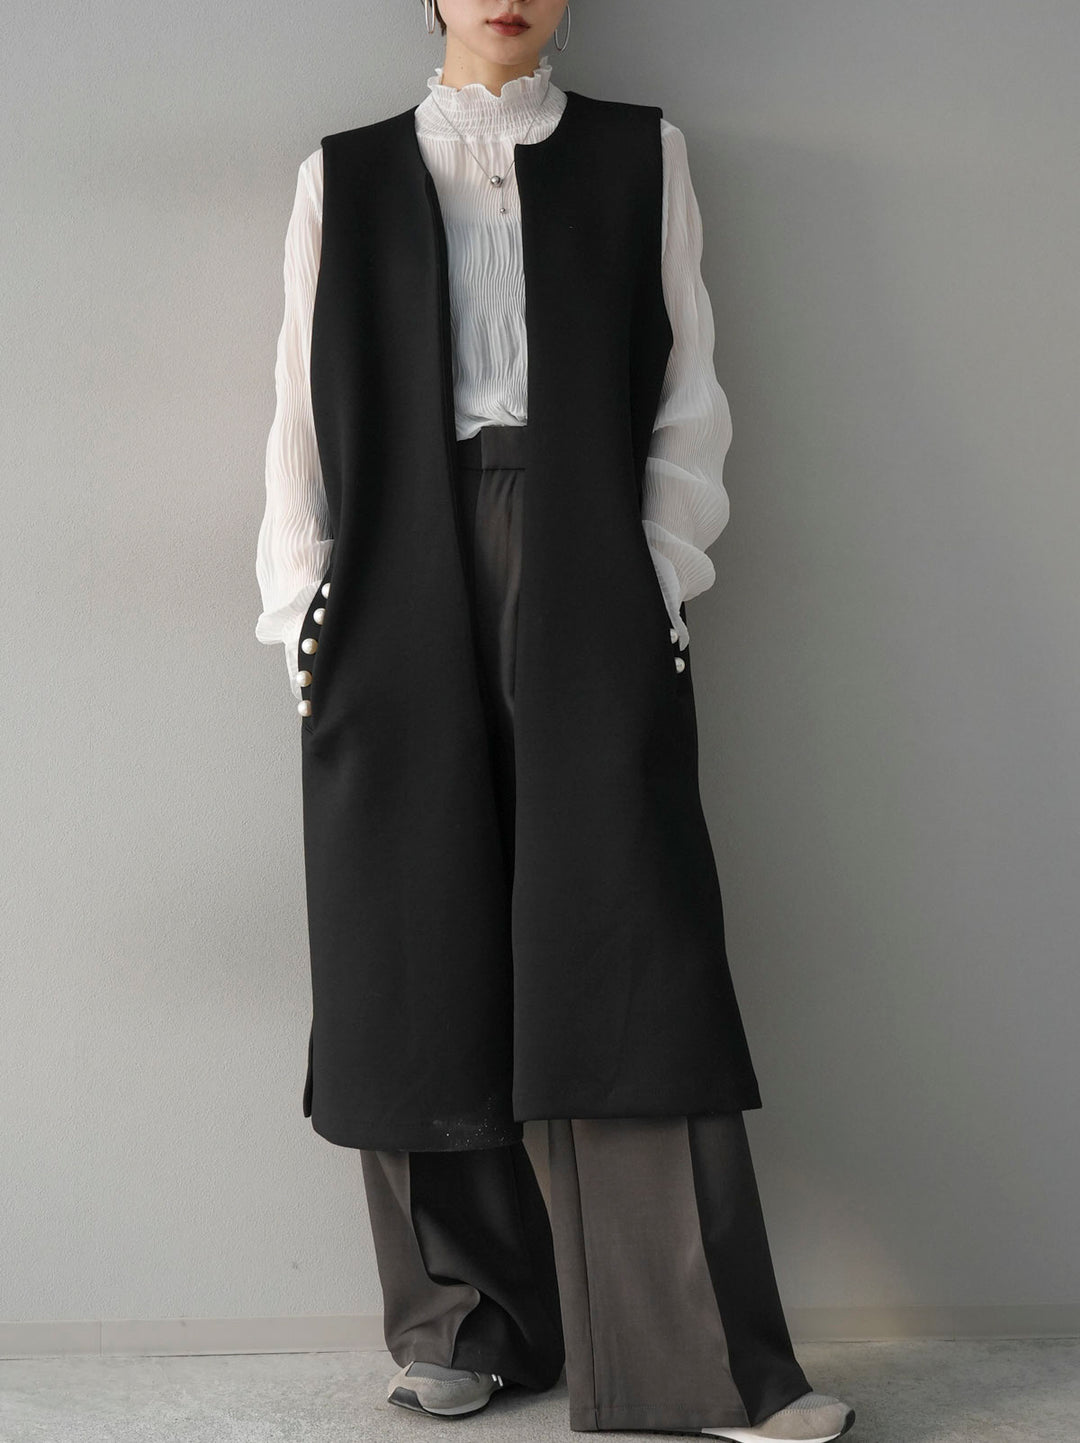 [Pre-order] Shirring chiffon blouse/off-white